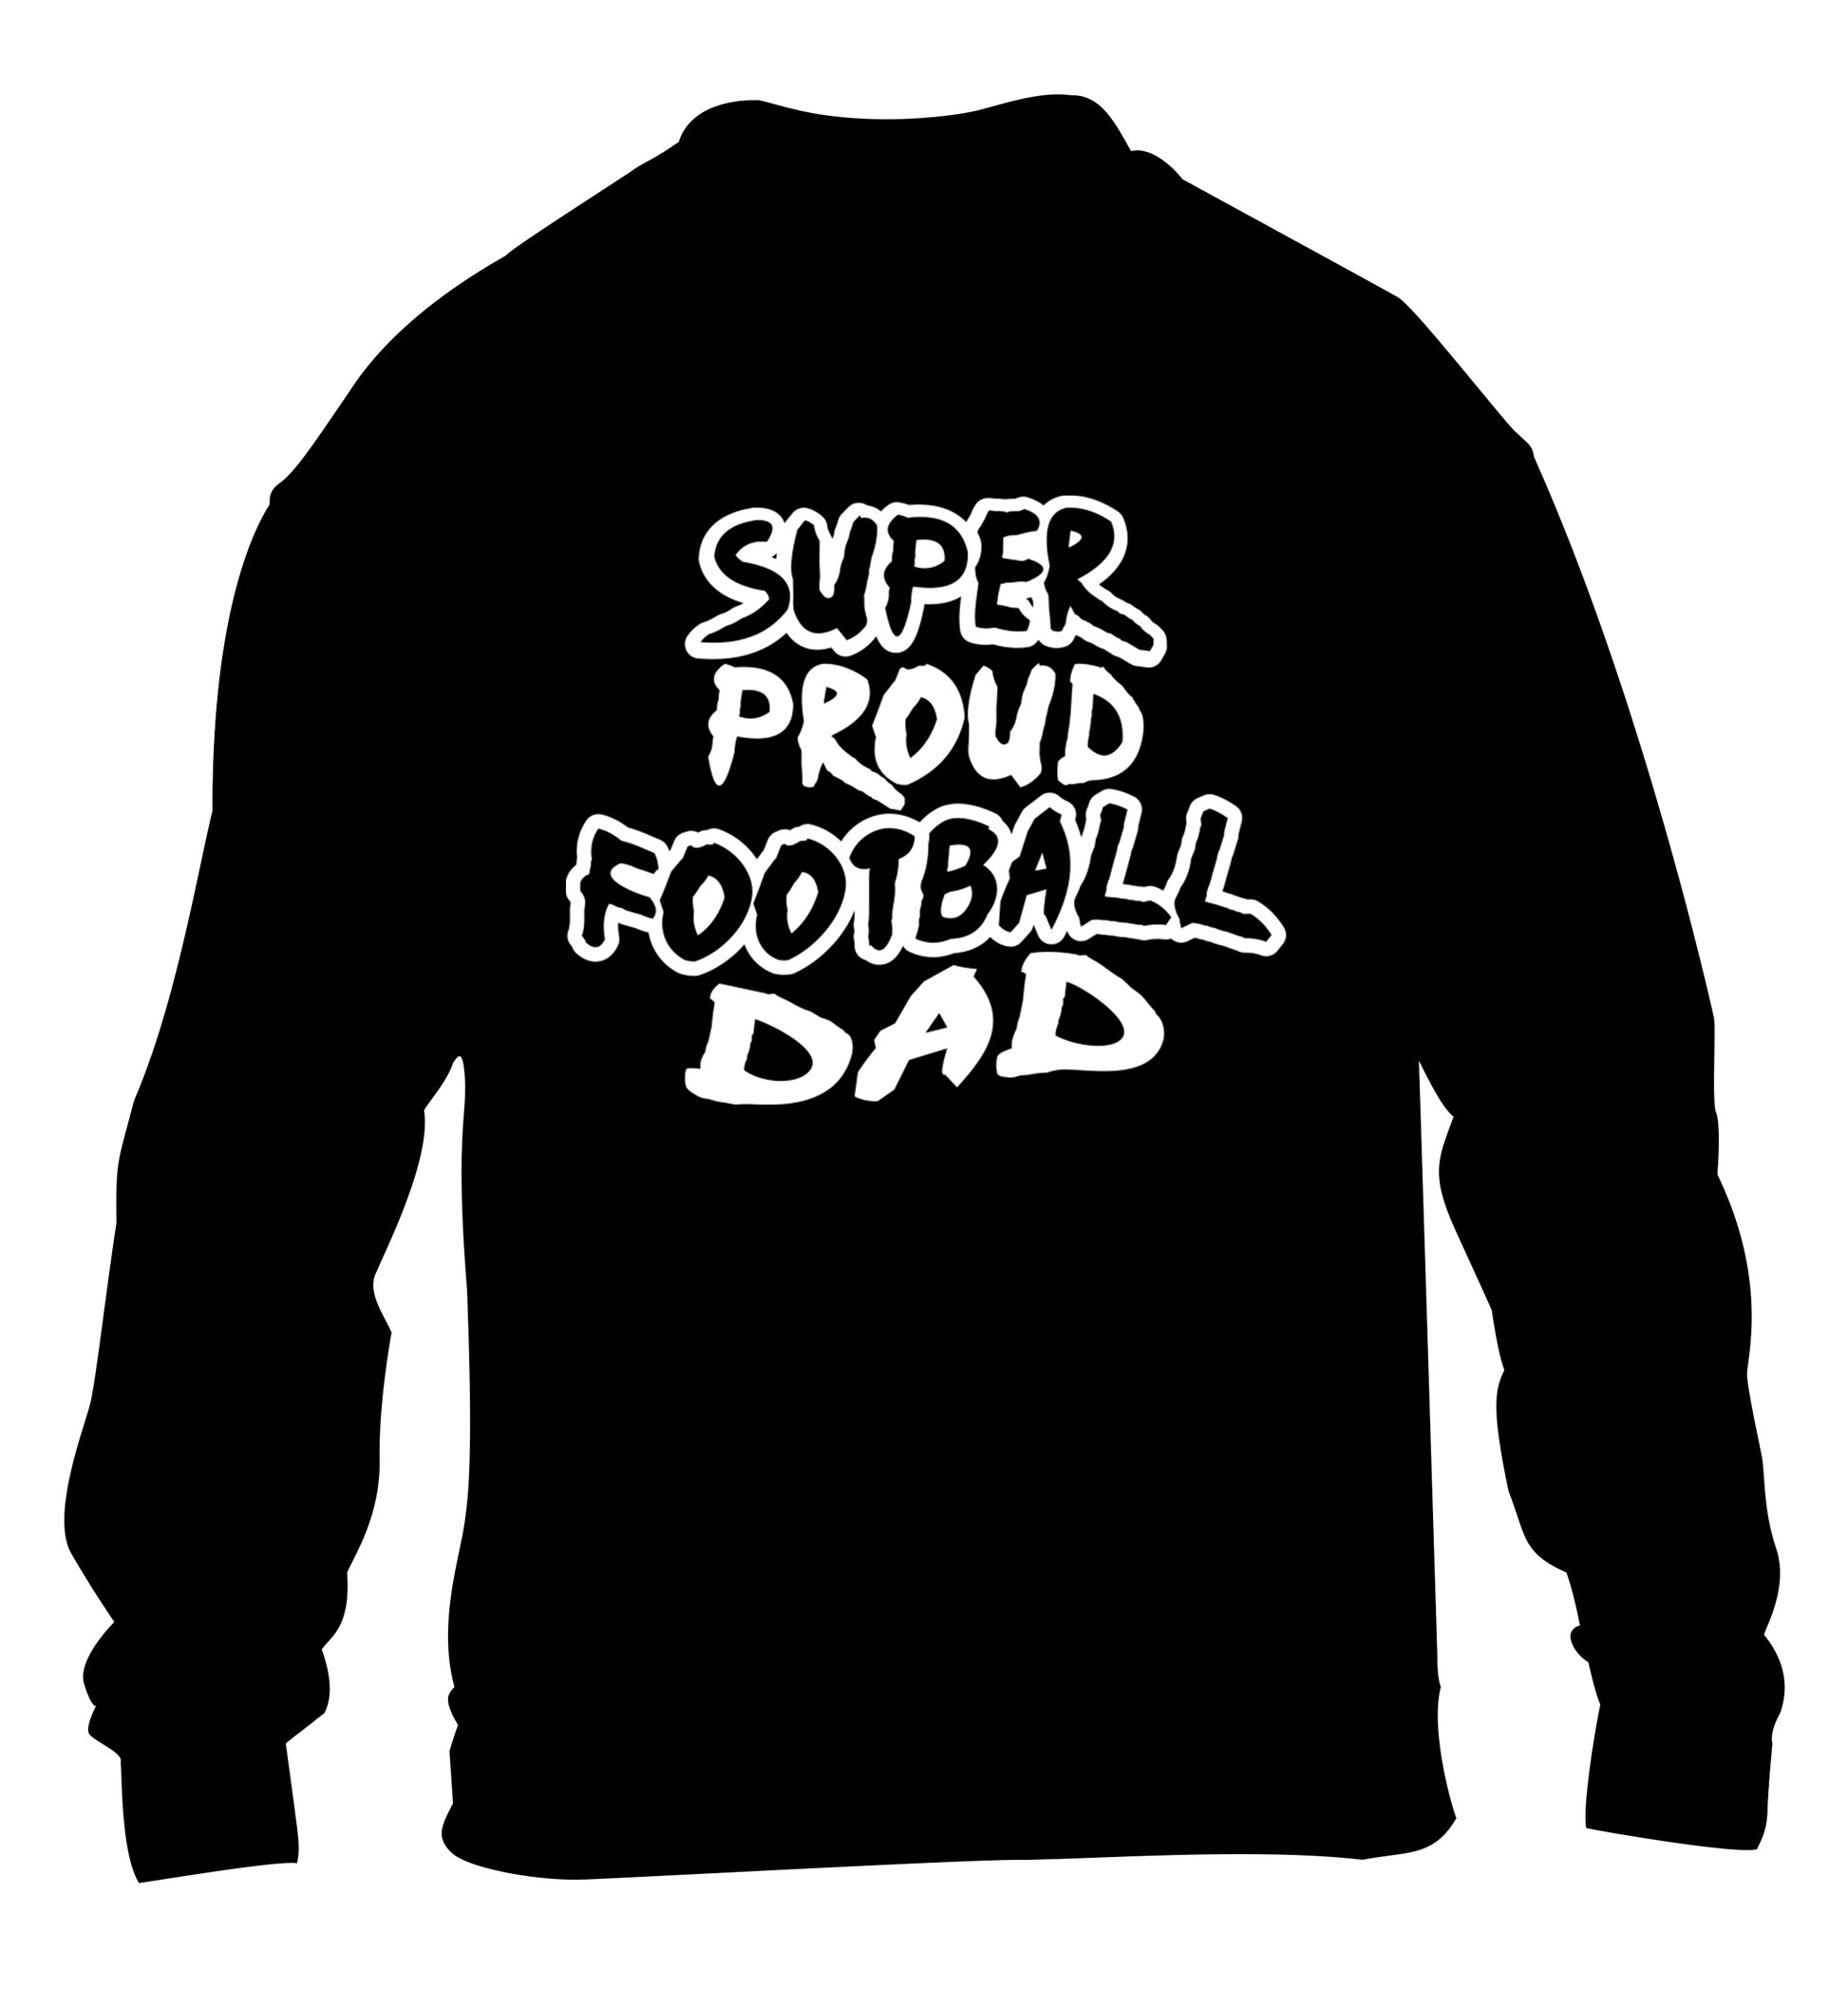 Super proud football dad children's black sweater 12-14 Years